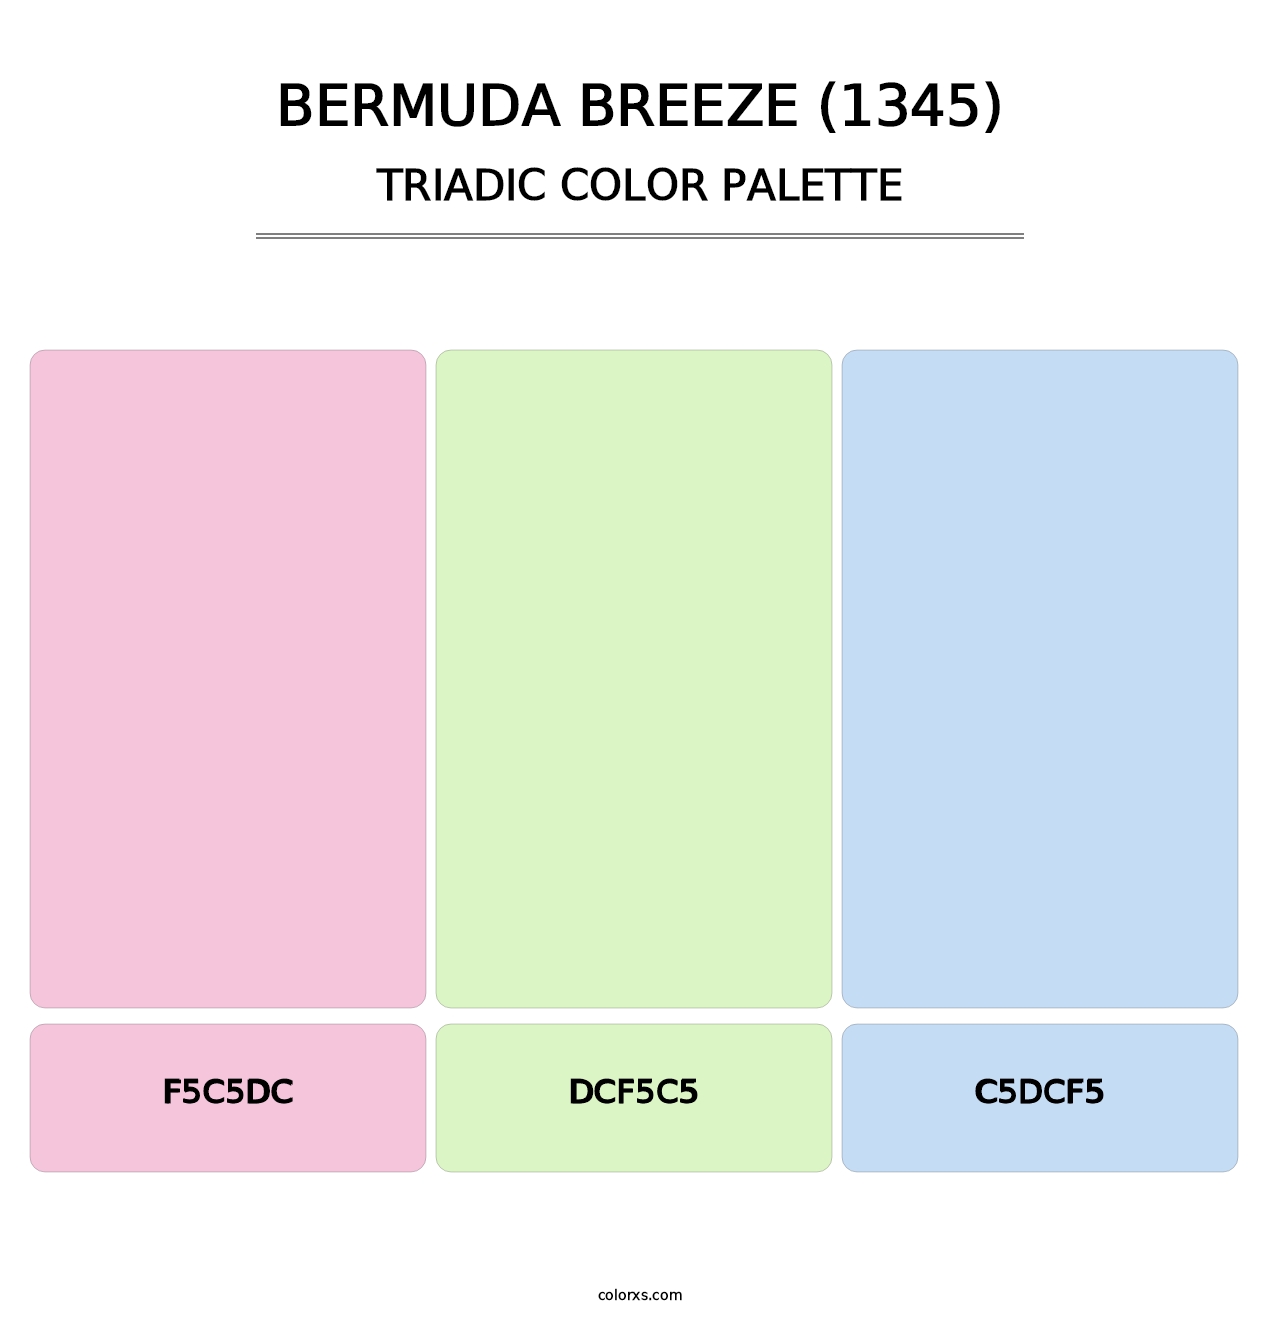 Bermuda Breeze (1345) - Triadic Color Palette